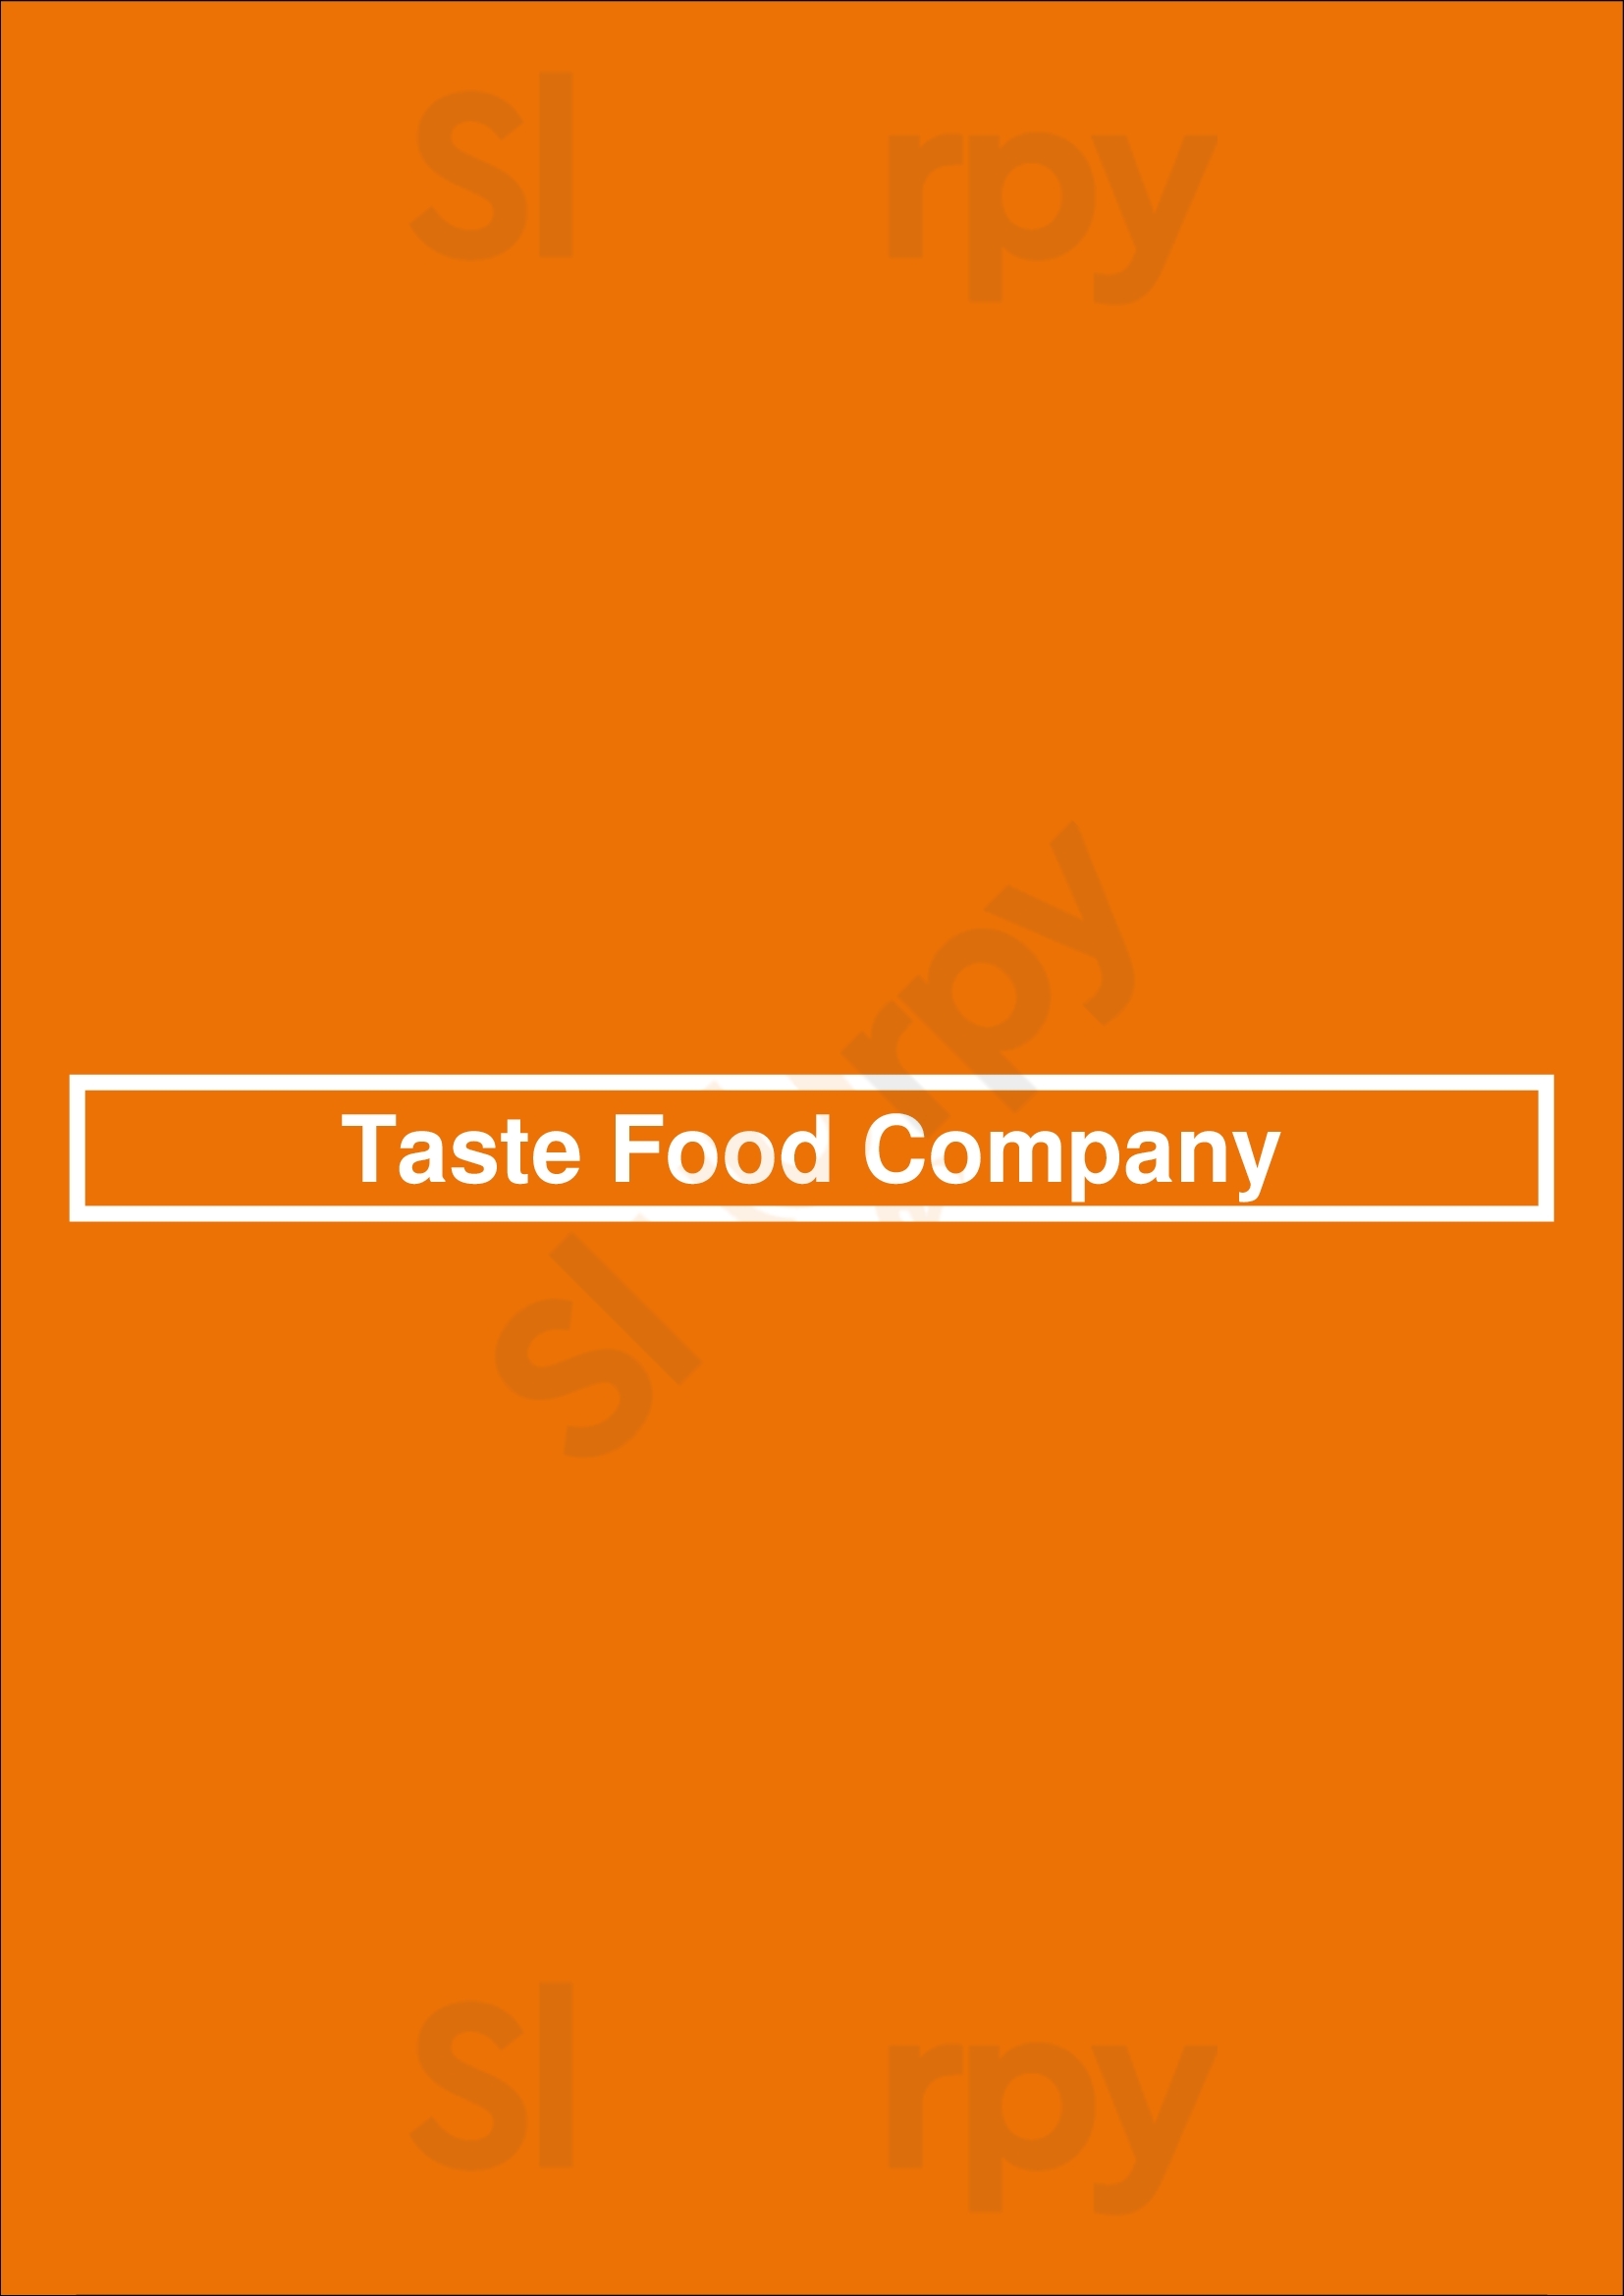 Taste Food Company Dublin Menu - 1